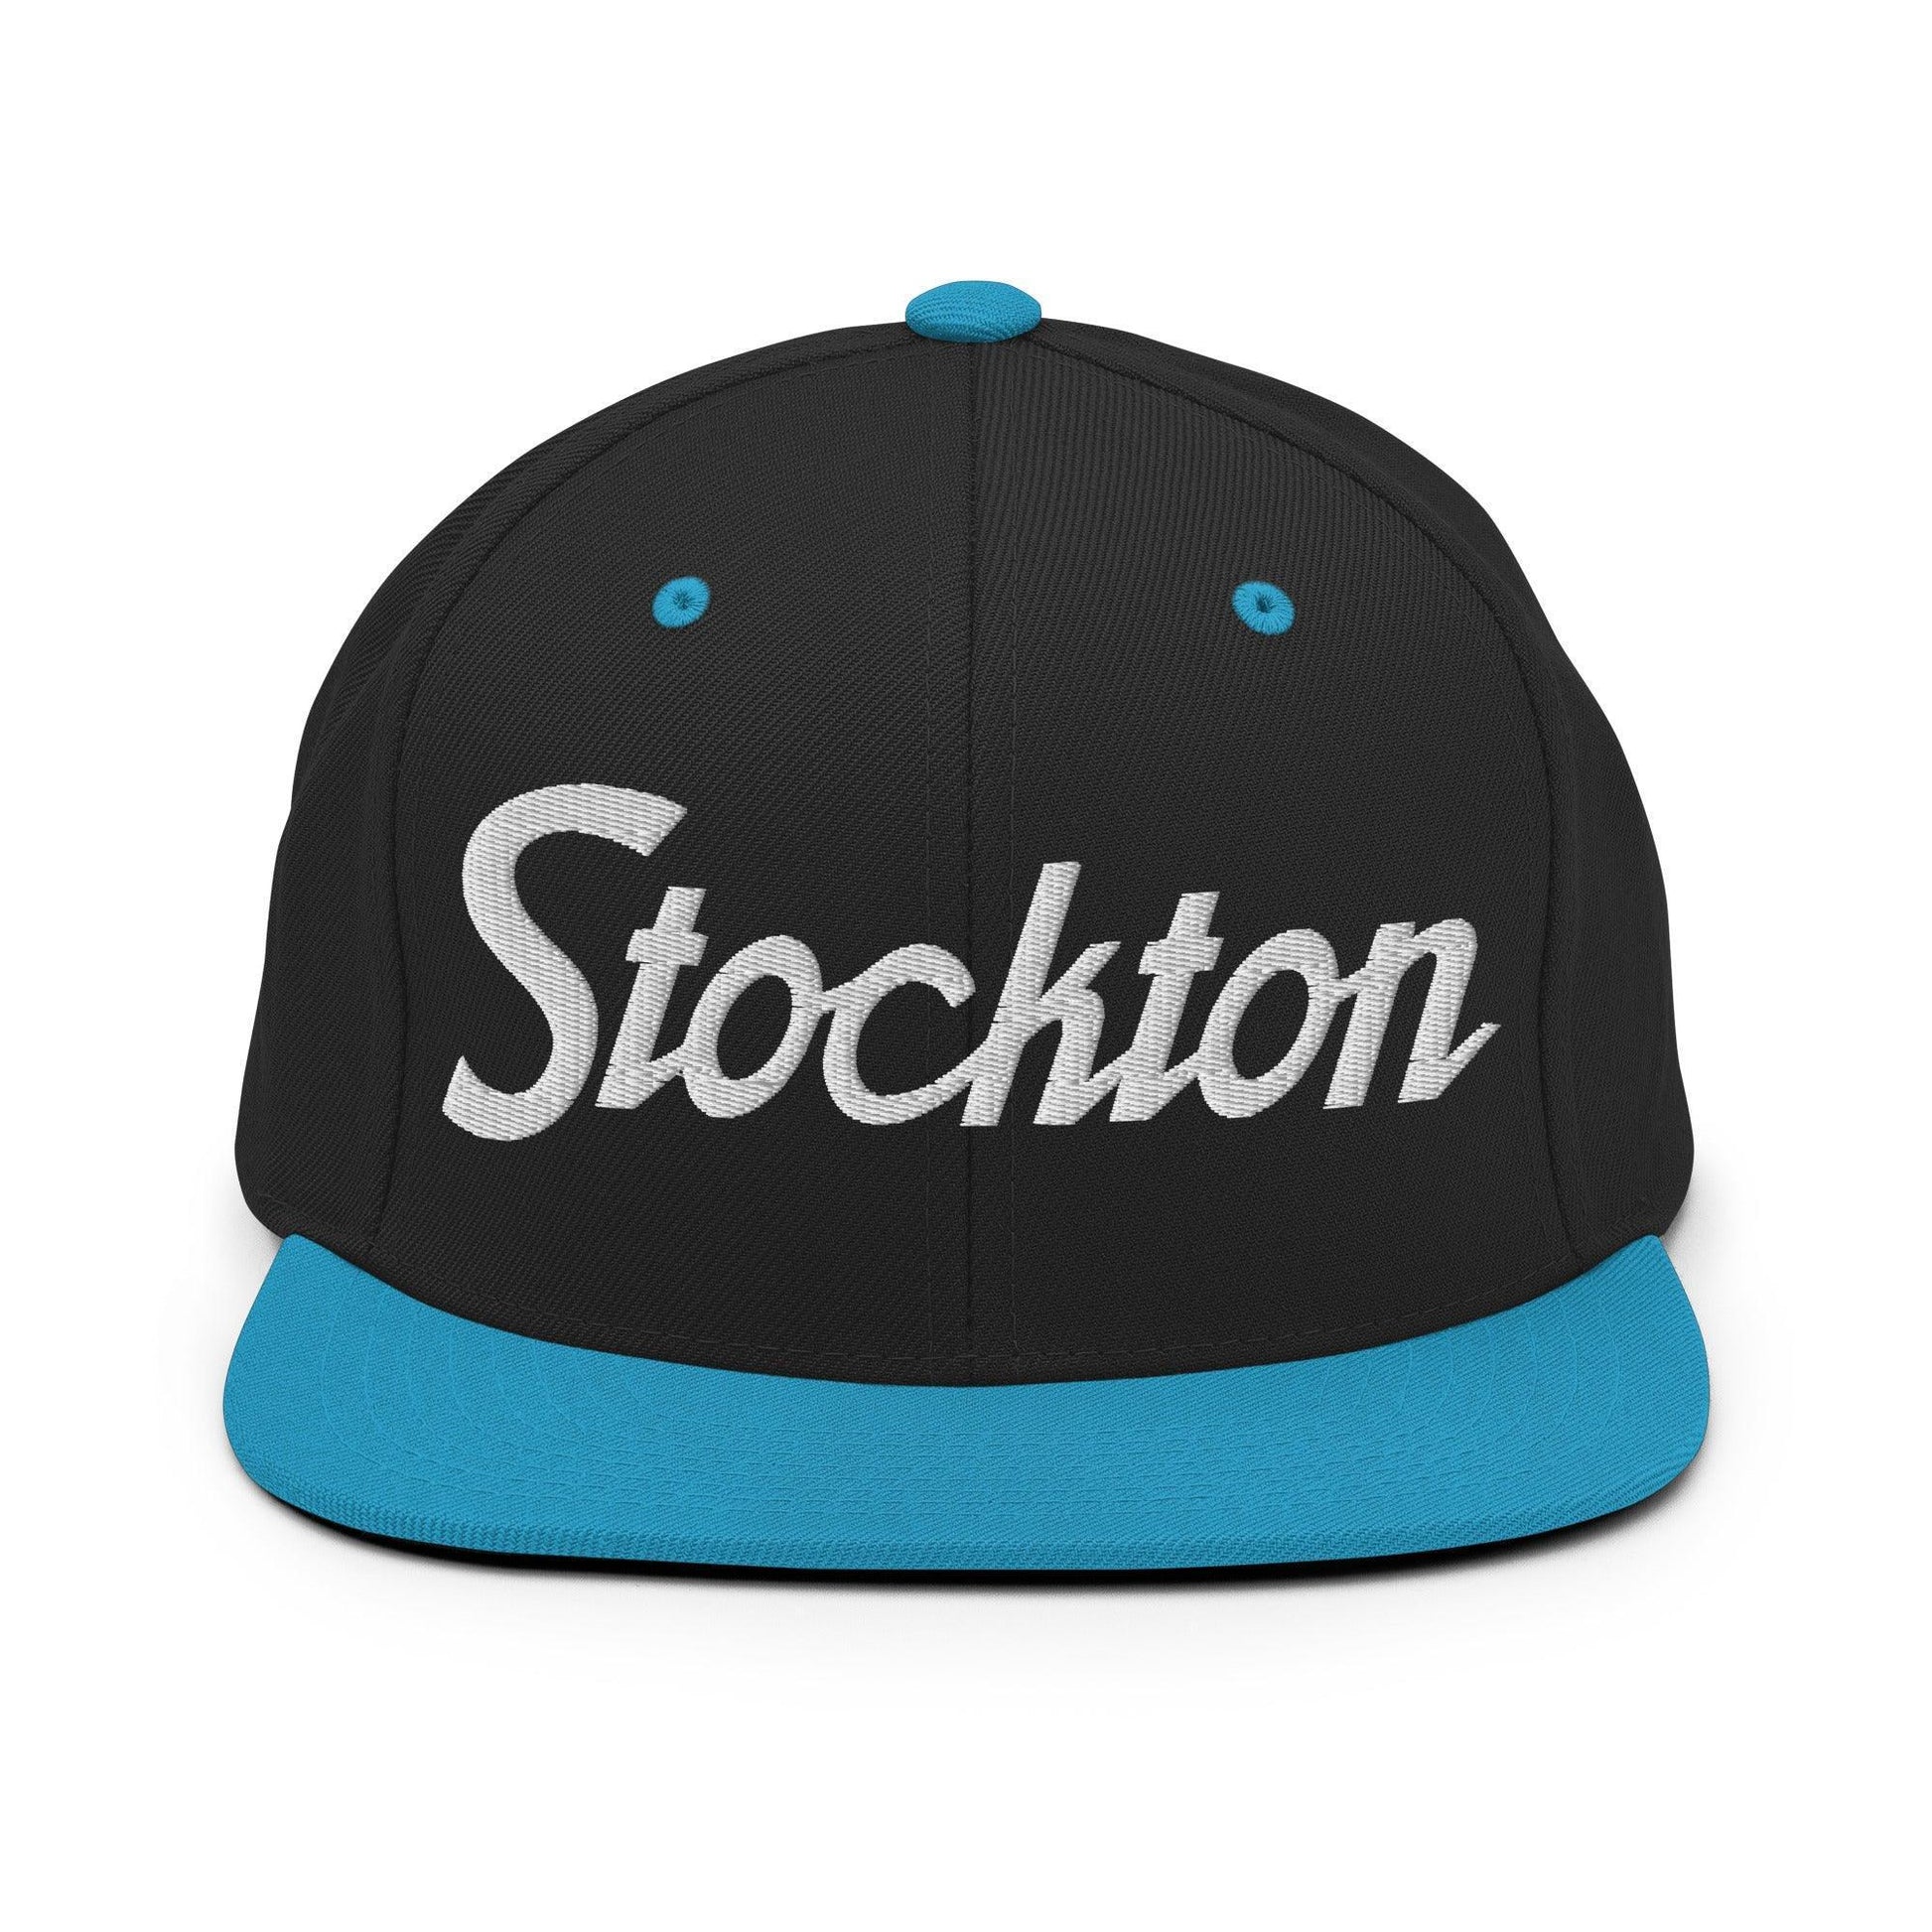 Stockton Script Snapback Hat Black/ Teal